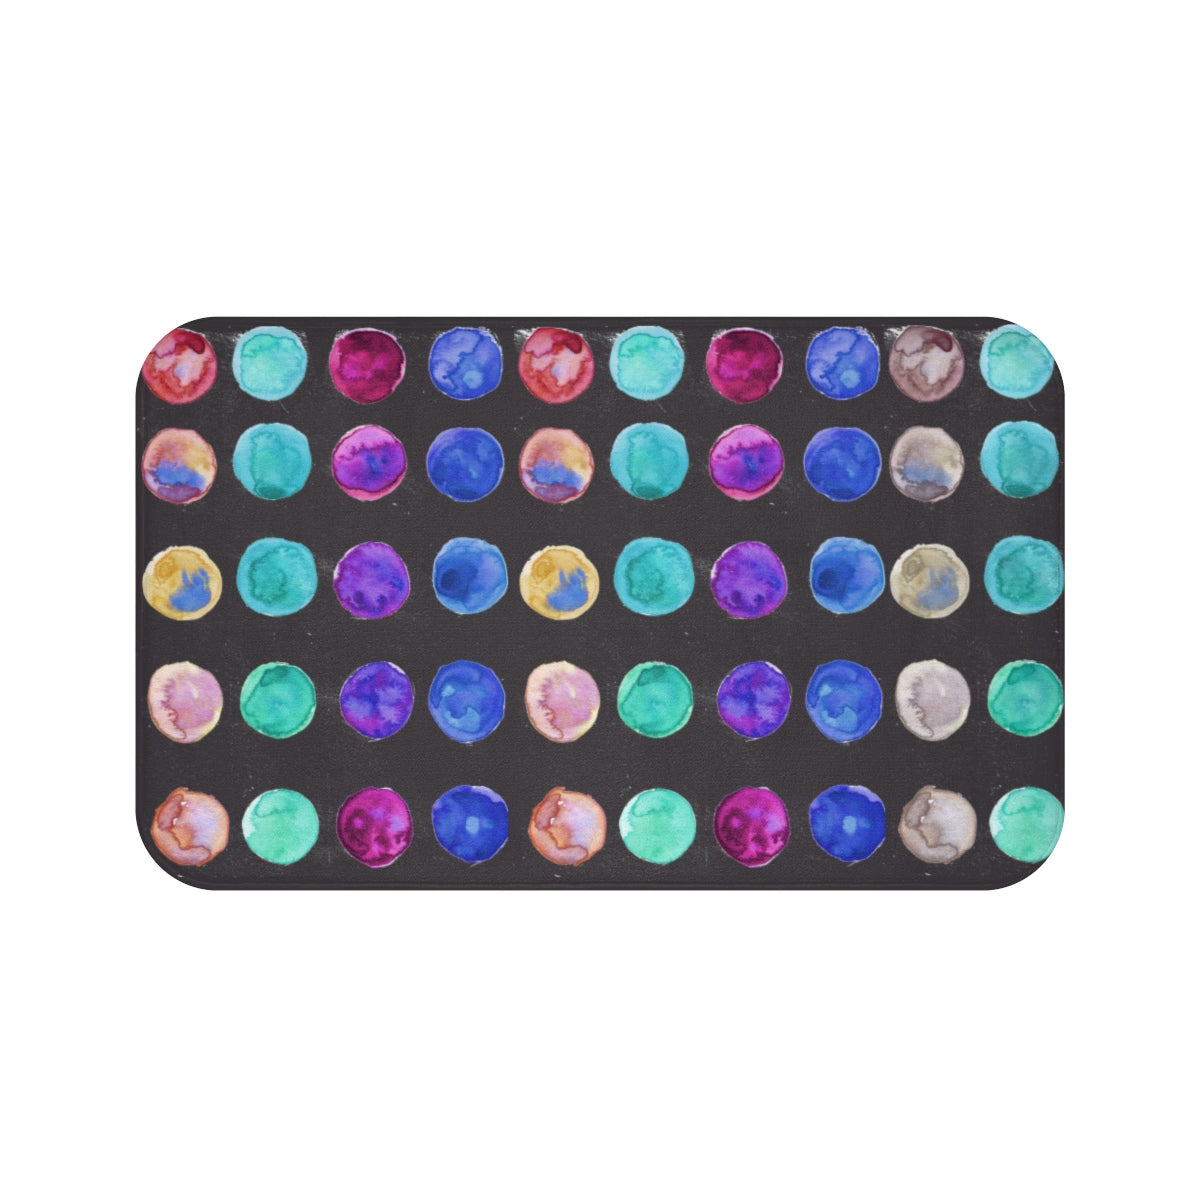 Dark Grey Multi-Colored Polka Dot Best Designer Microfiber Bath Mat - Made in USA-Bath Mat-Large 34x21-Heidi Kimura Art LLC